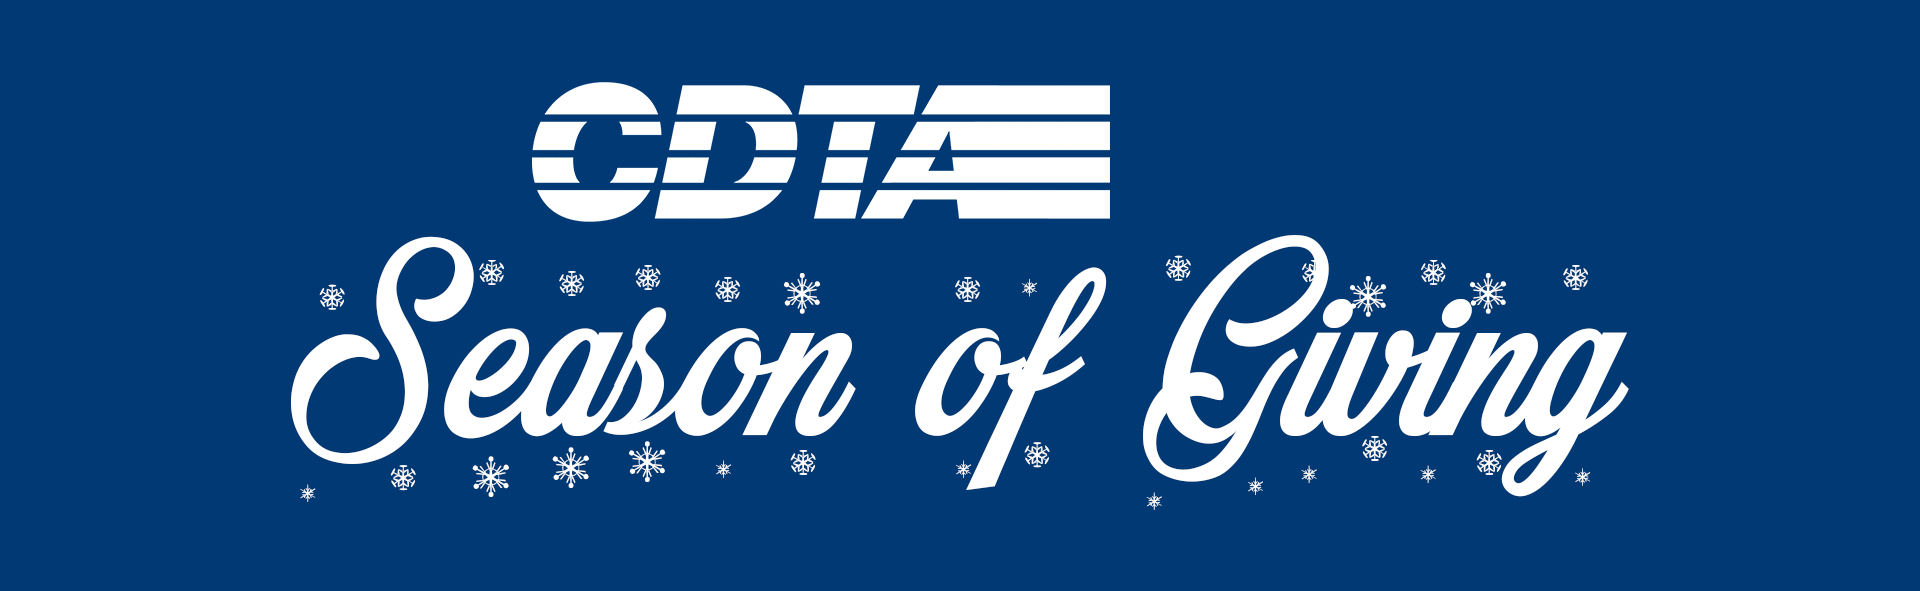 CDTA Season of Giving